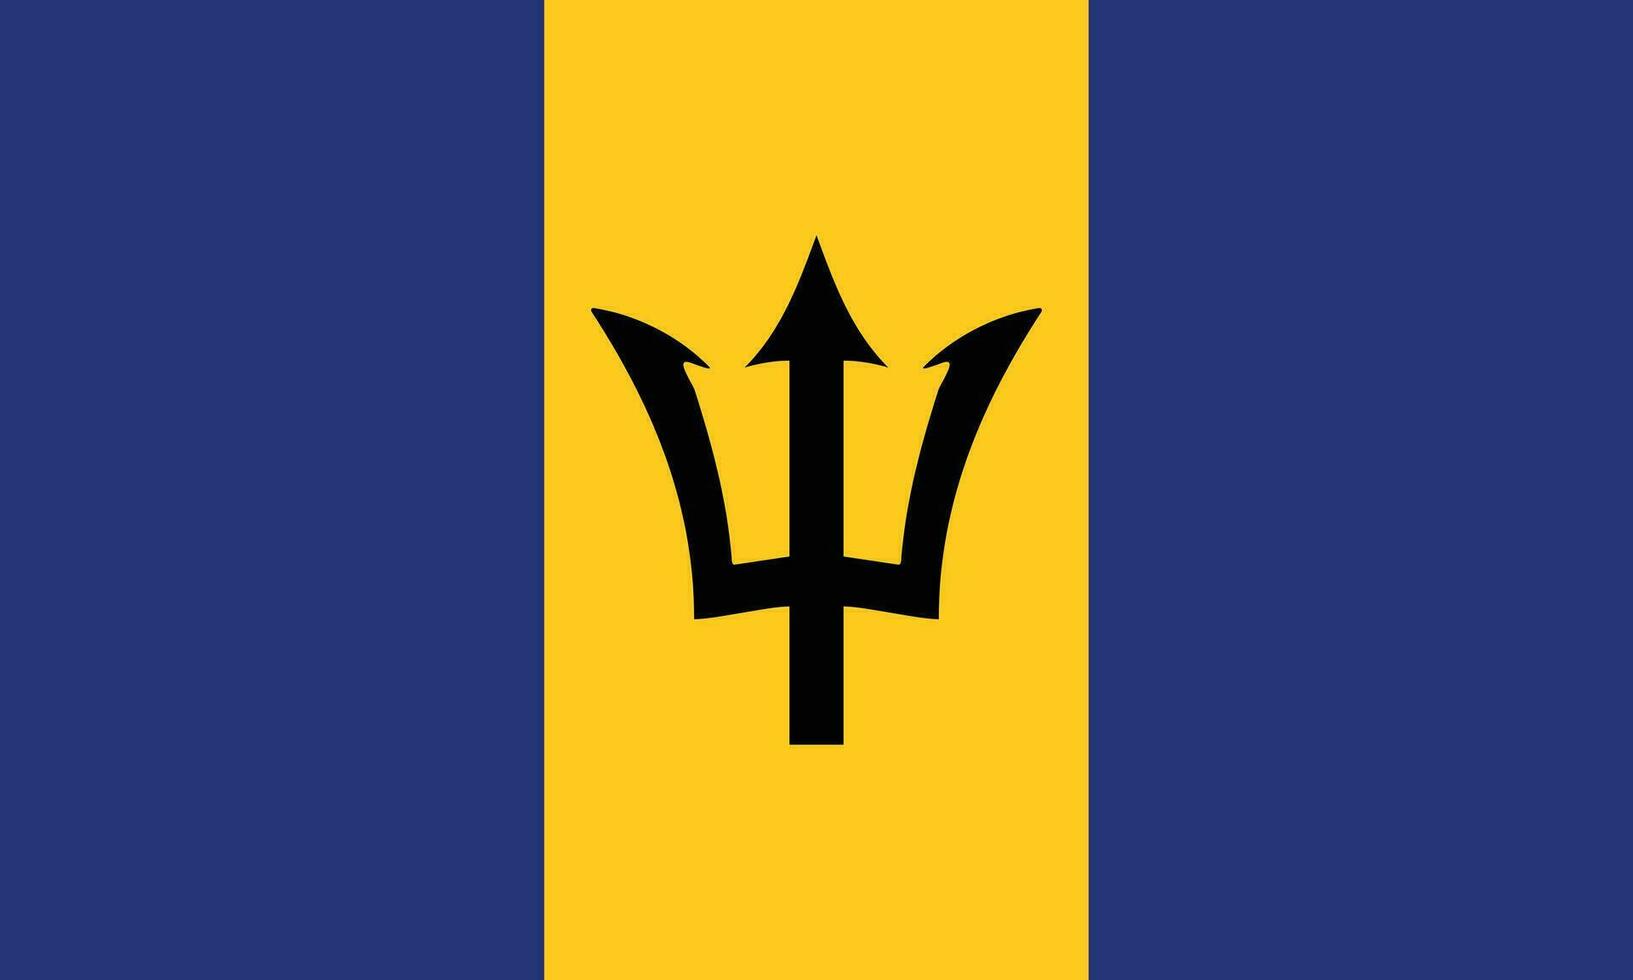 Flat Illustration of Barbados flag. Barbados flag design. vector